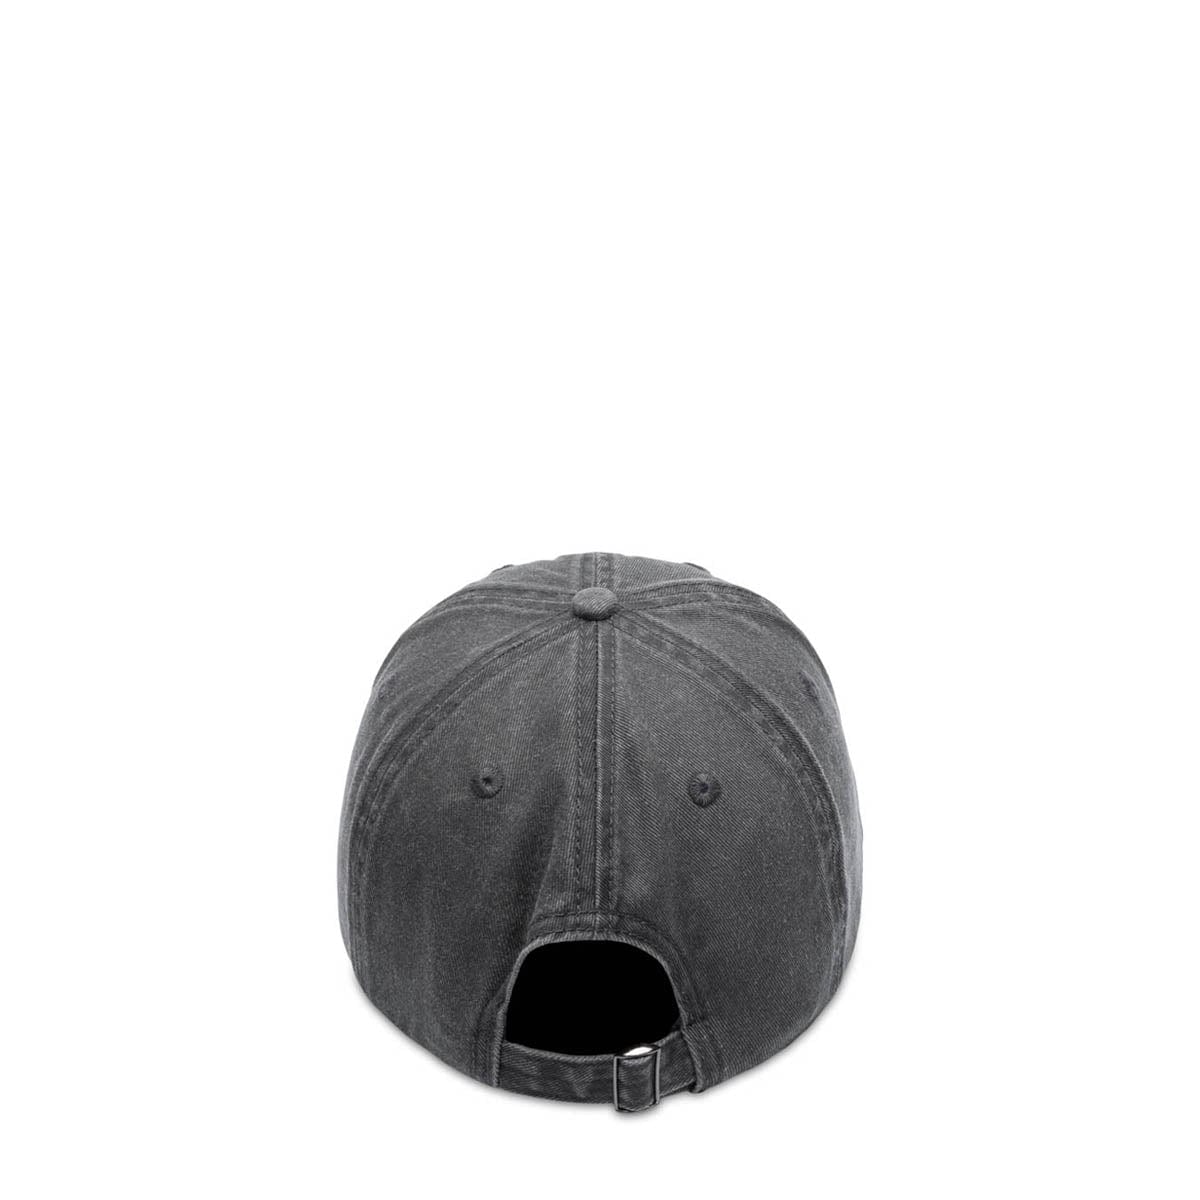 Metalwood Studio Headwear BLACK / O/S ENERGY TRANSFER 6-PANEL HAT